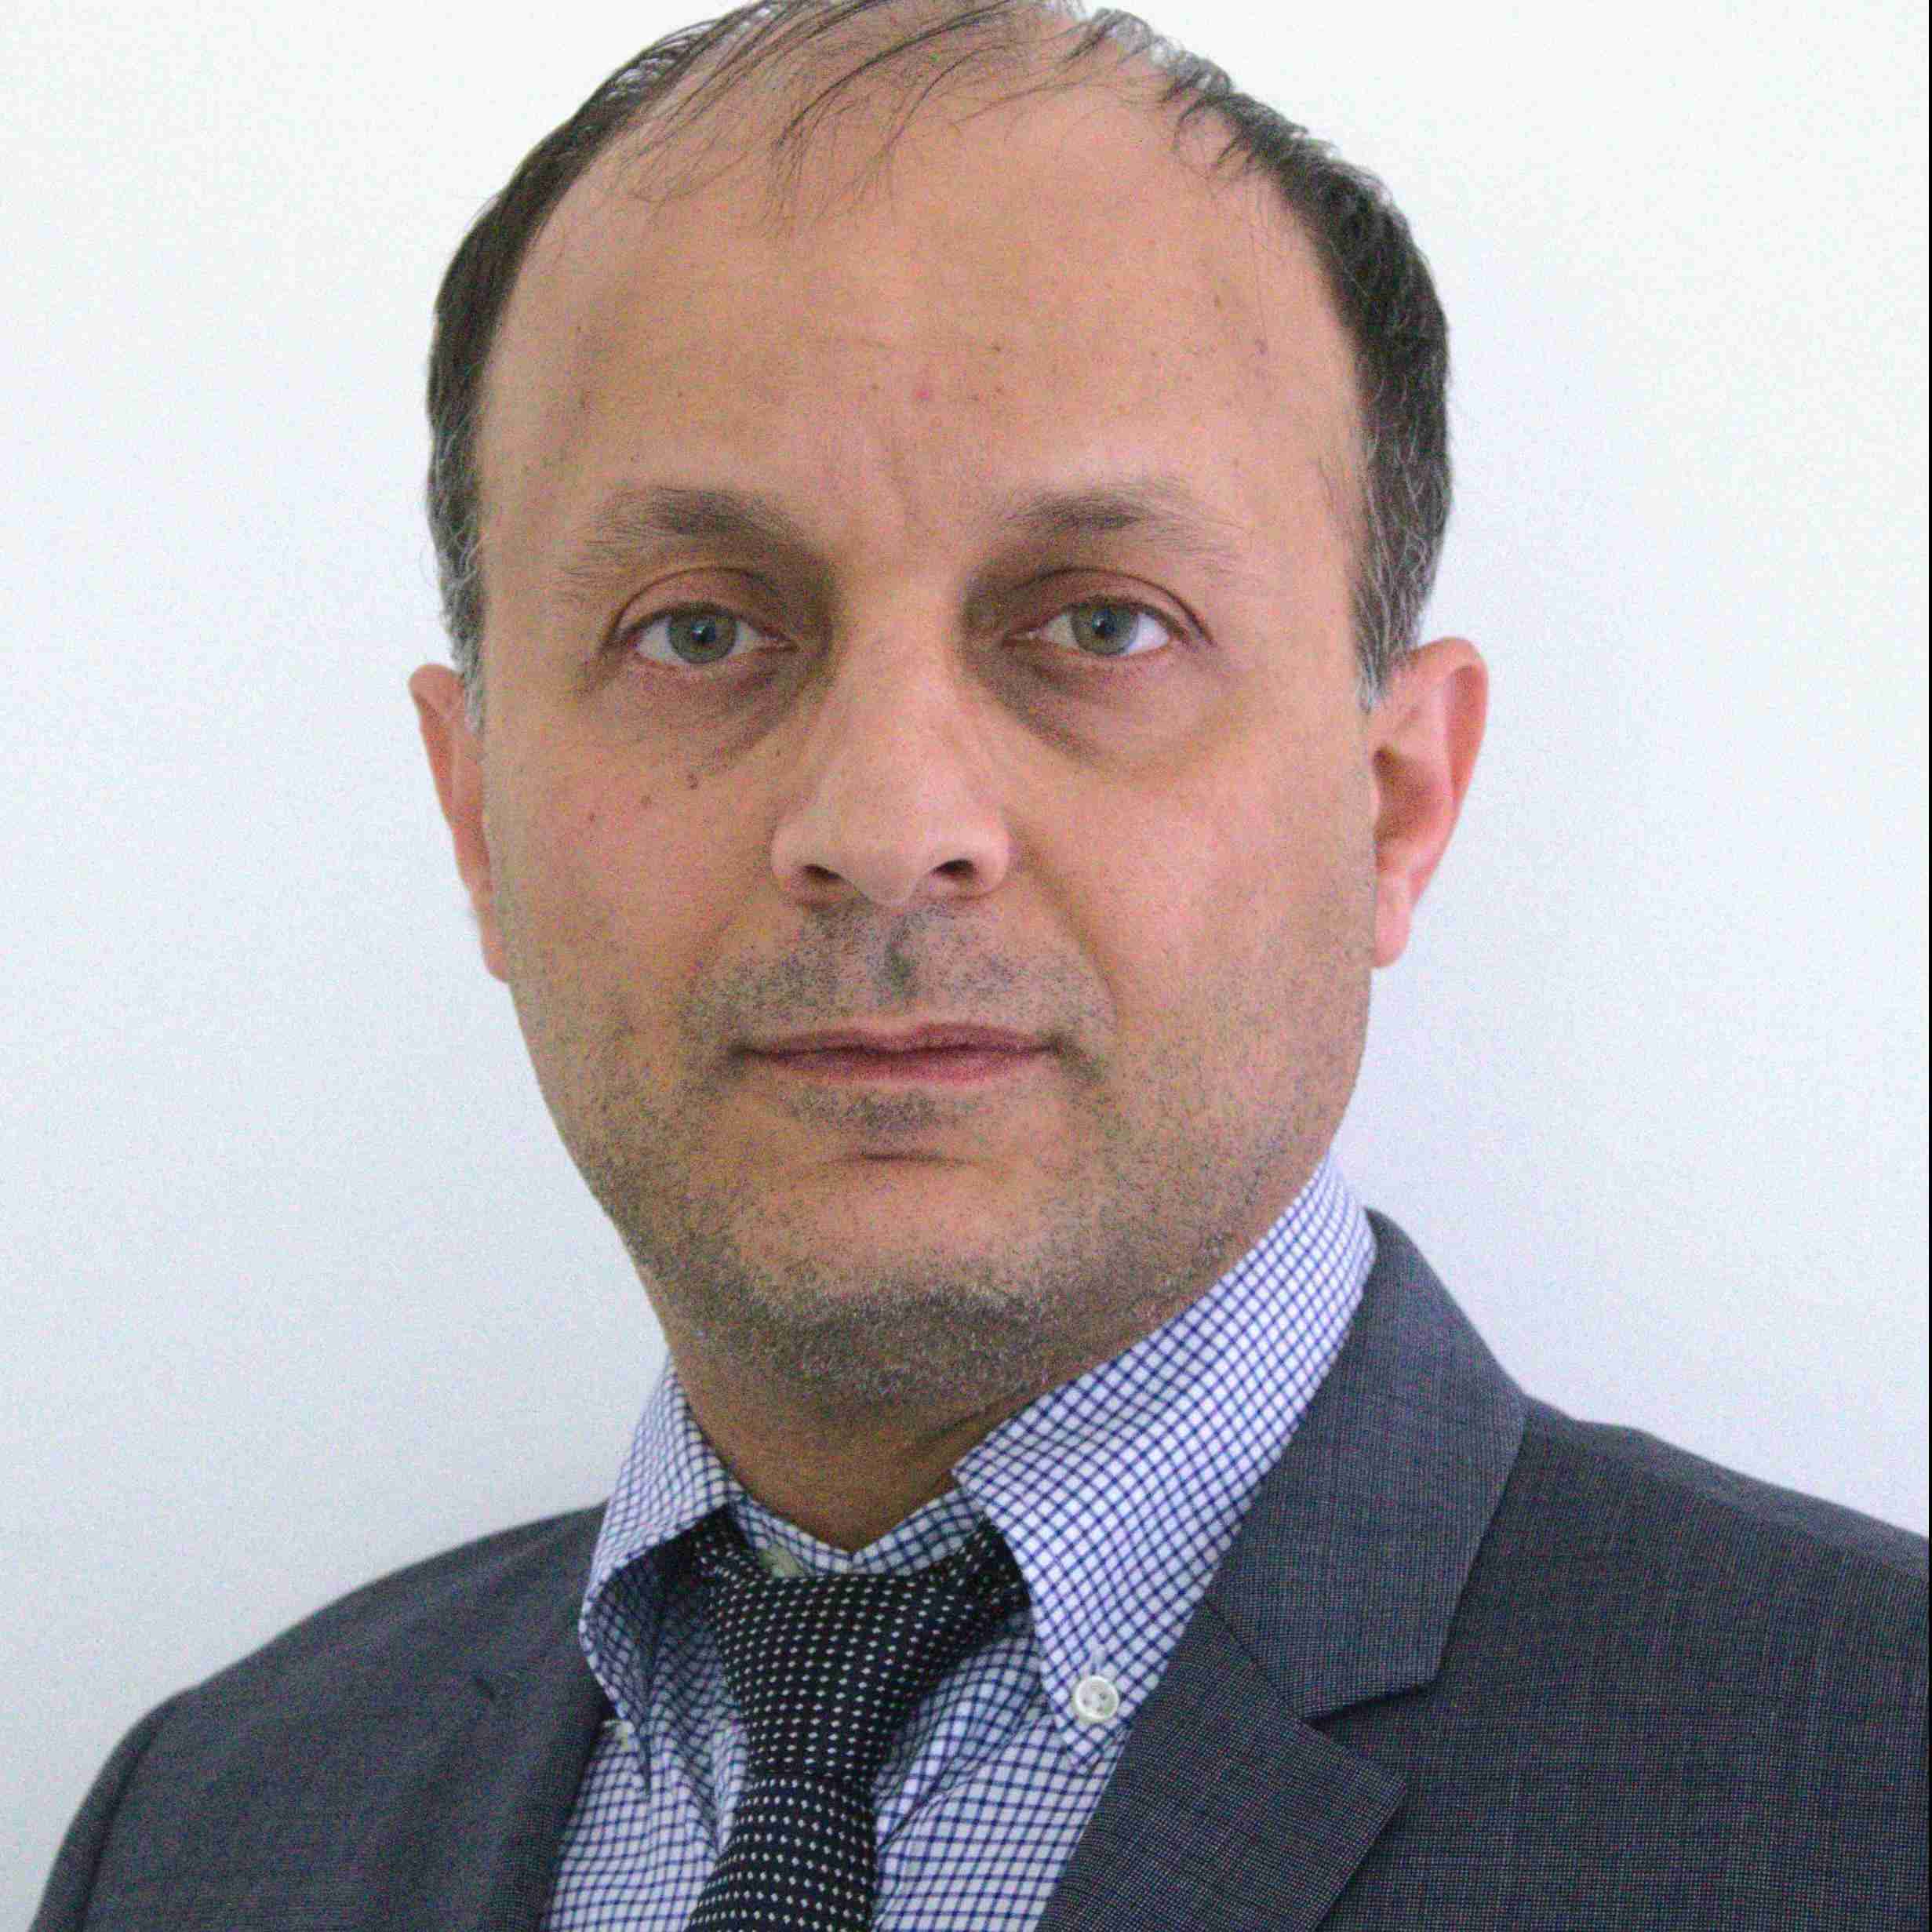 Profile image of Dr Zak Abdallah